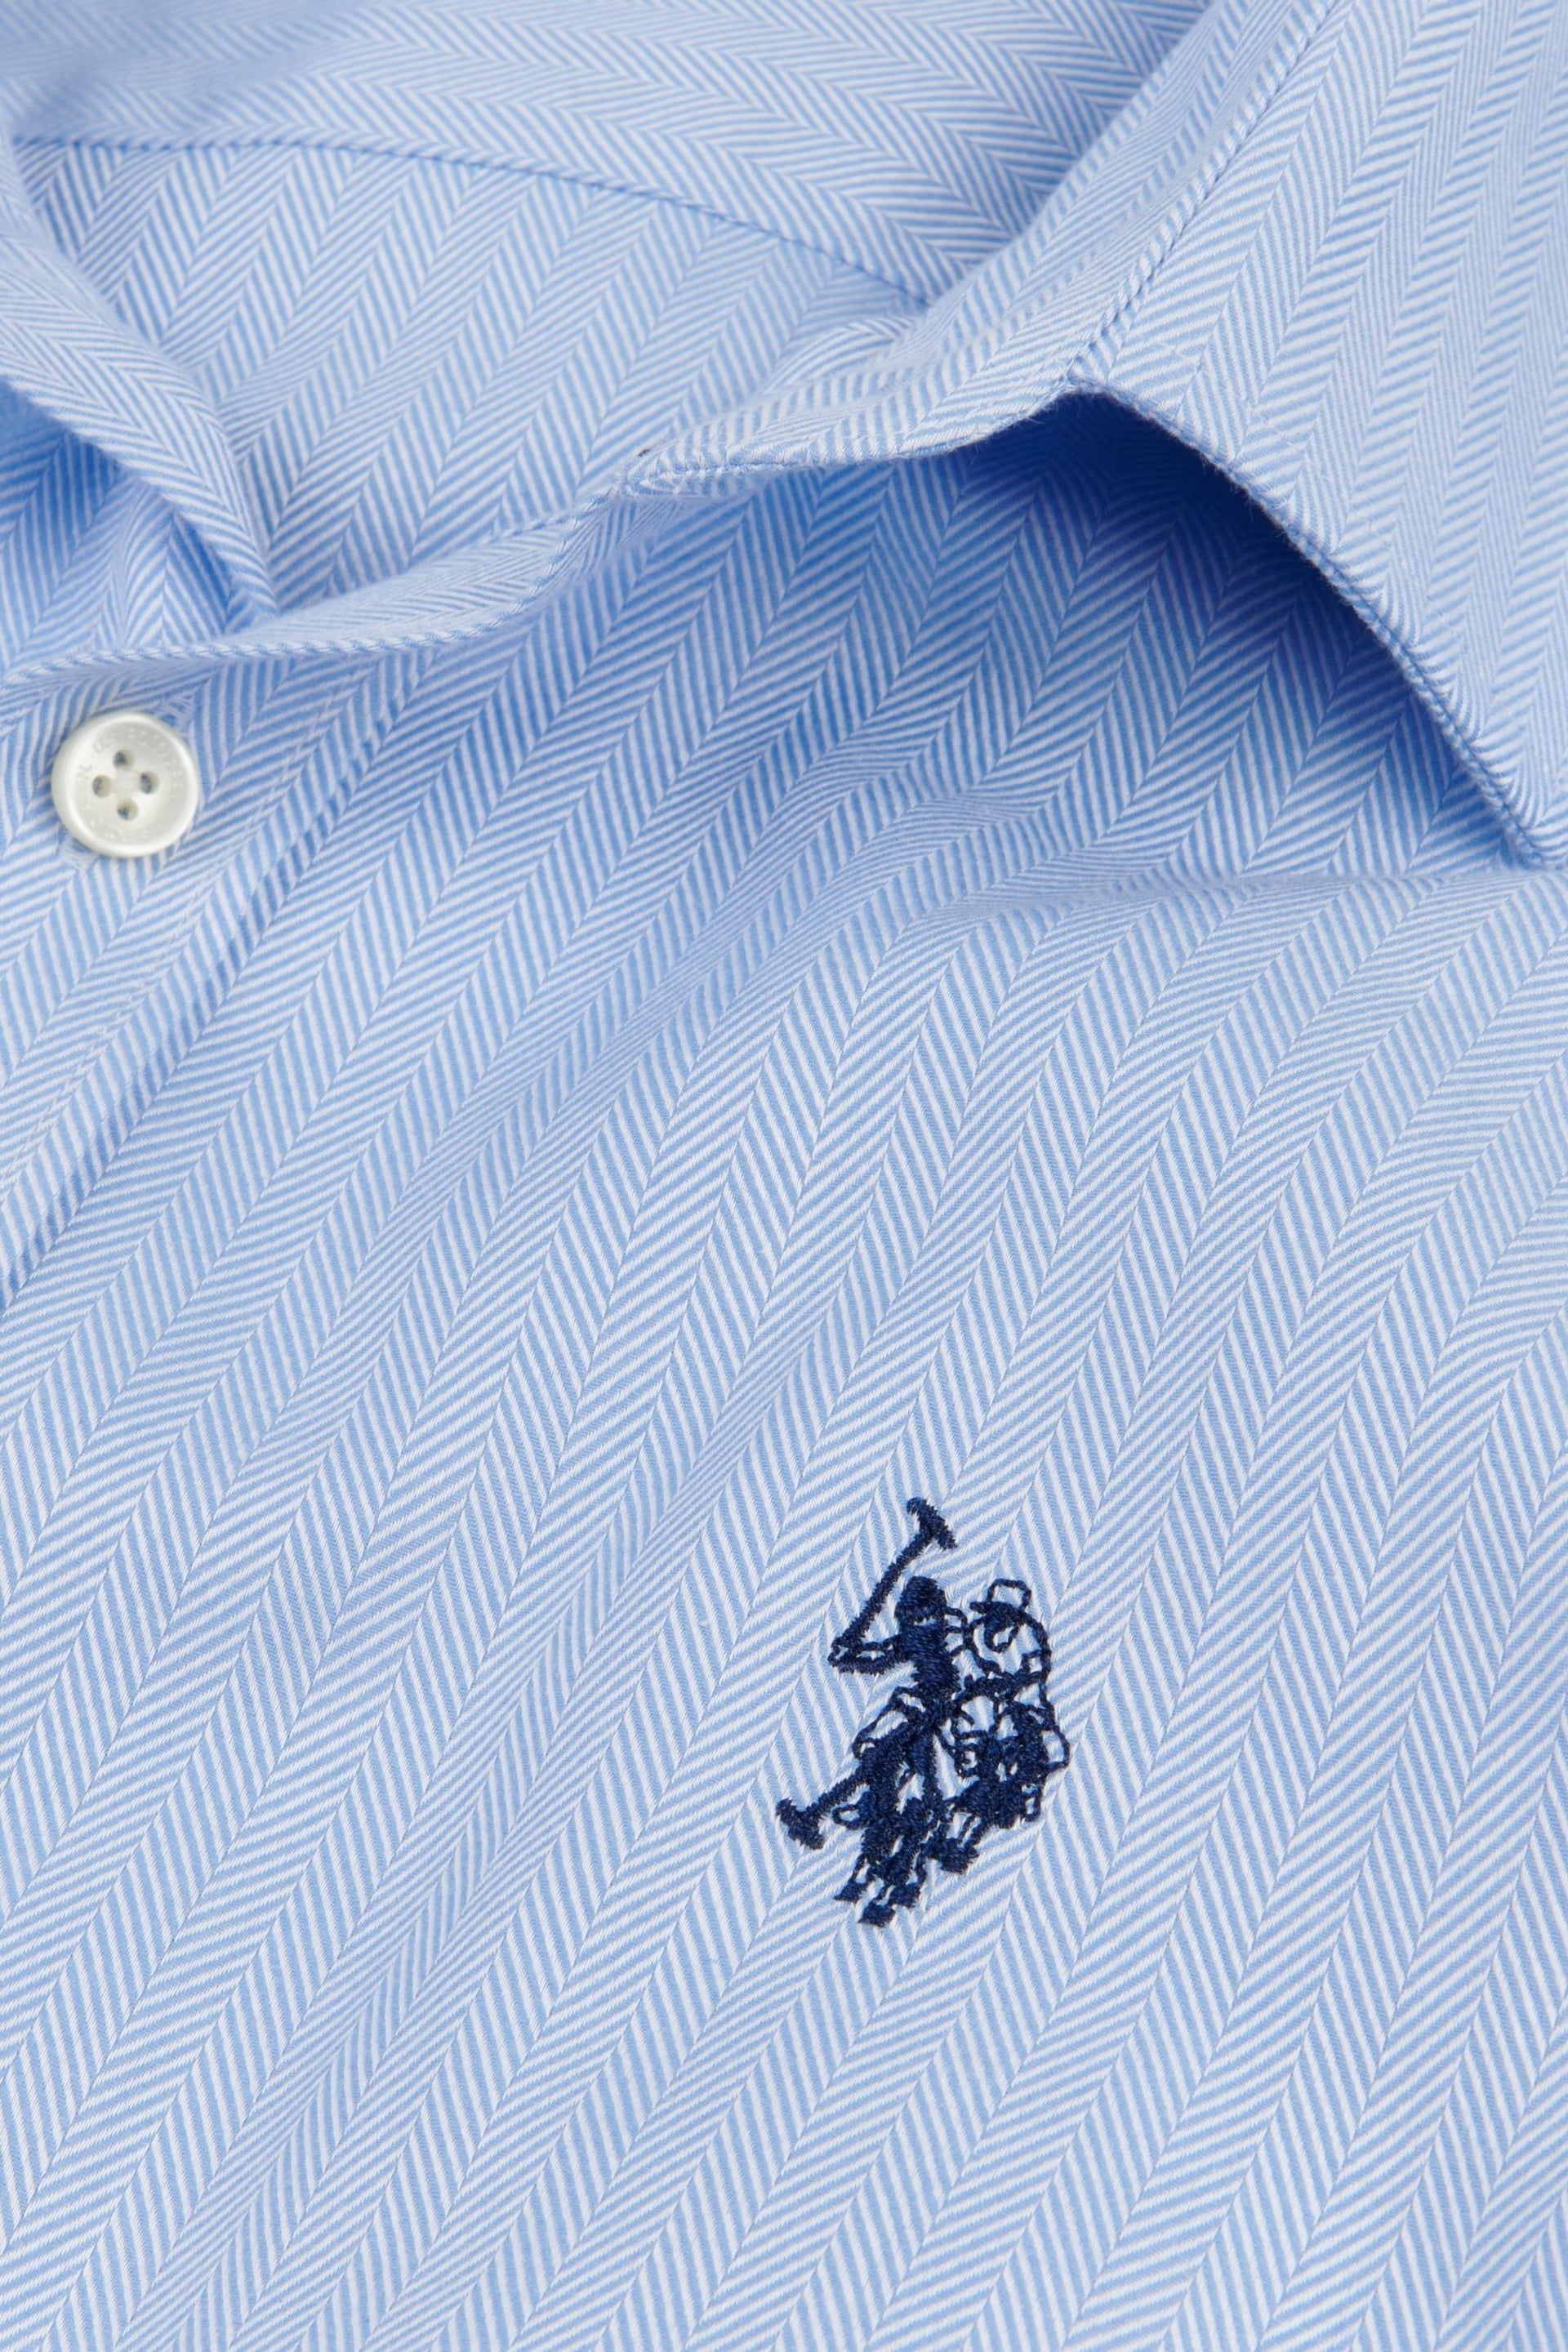 U.S. Polo Assn. Mens Long Sleeve Herringbone Twill White Shirt - Image 7 of 8